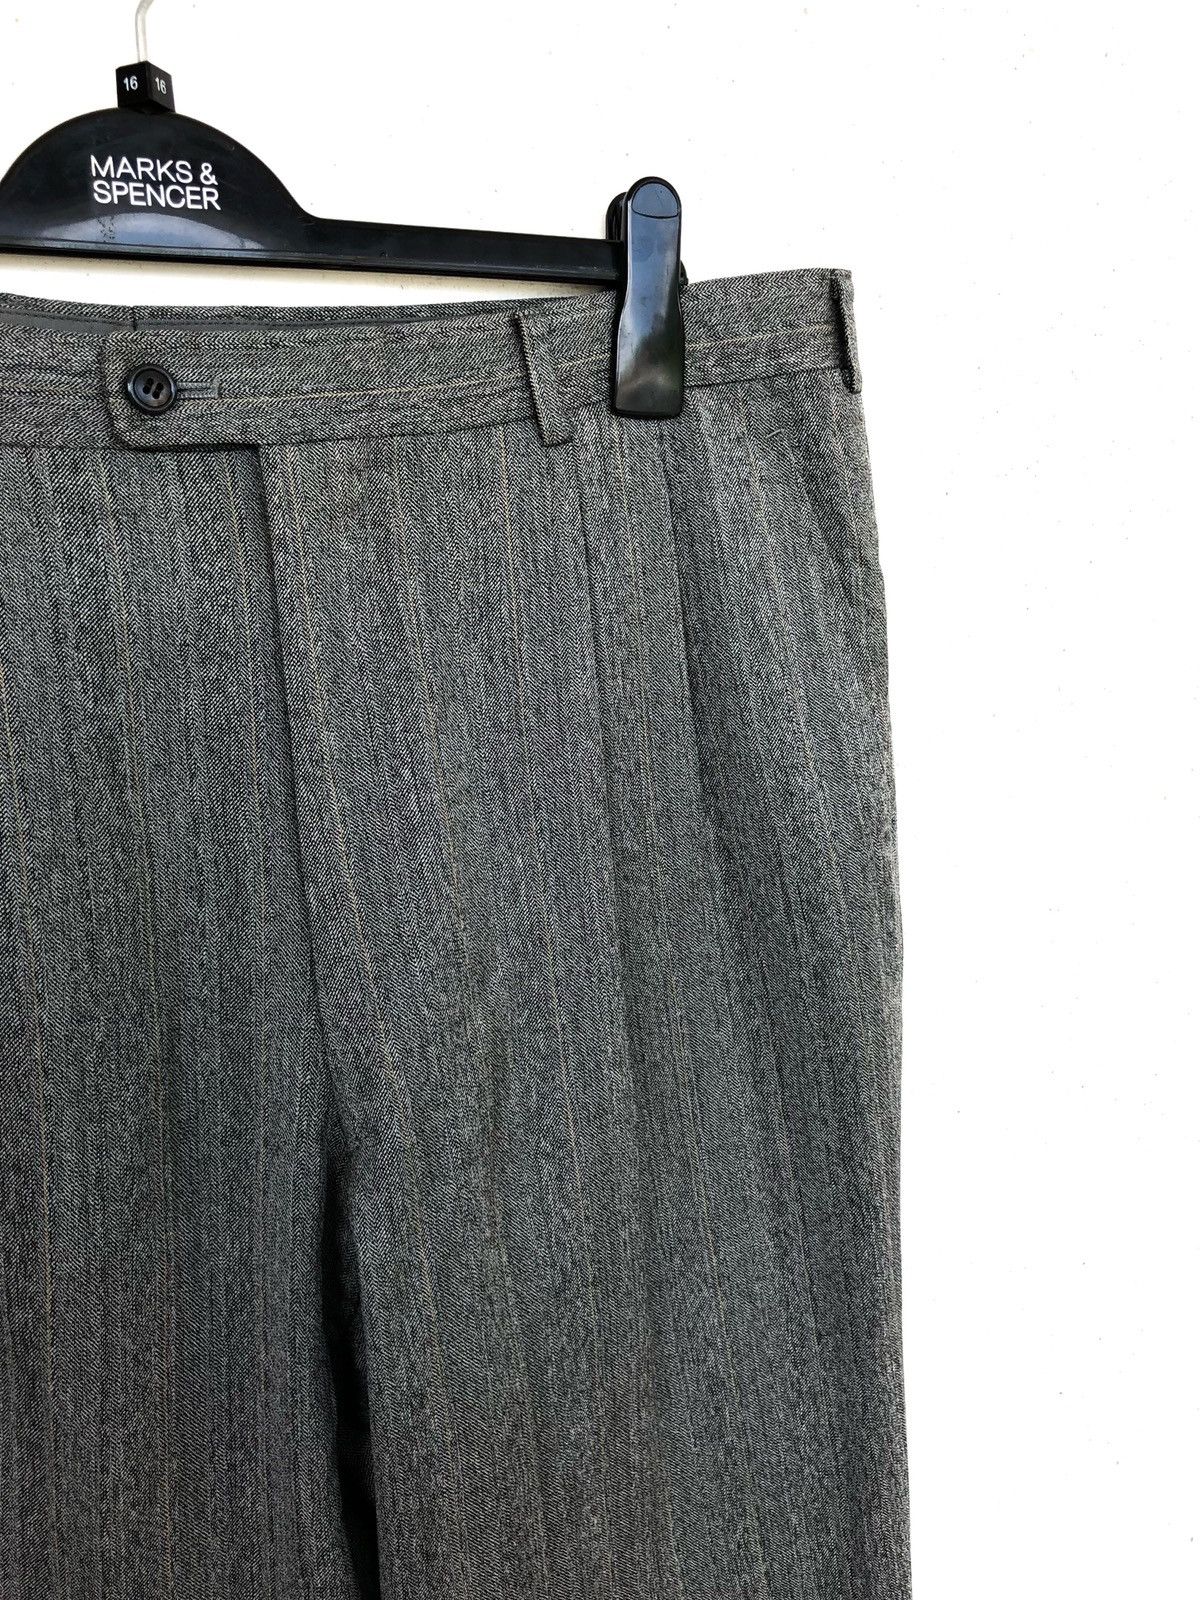 Lanvin GRAIL🔥Lanvin Paris Grey Striped Wool Oversized Baggy Pants Size US 38 / EU 54 - 5 Thumbnail